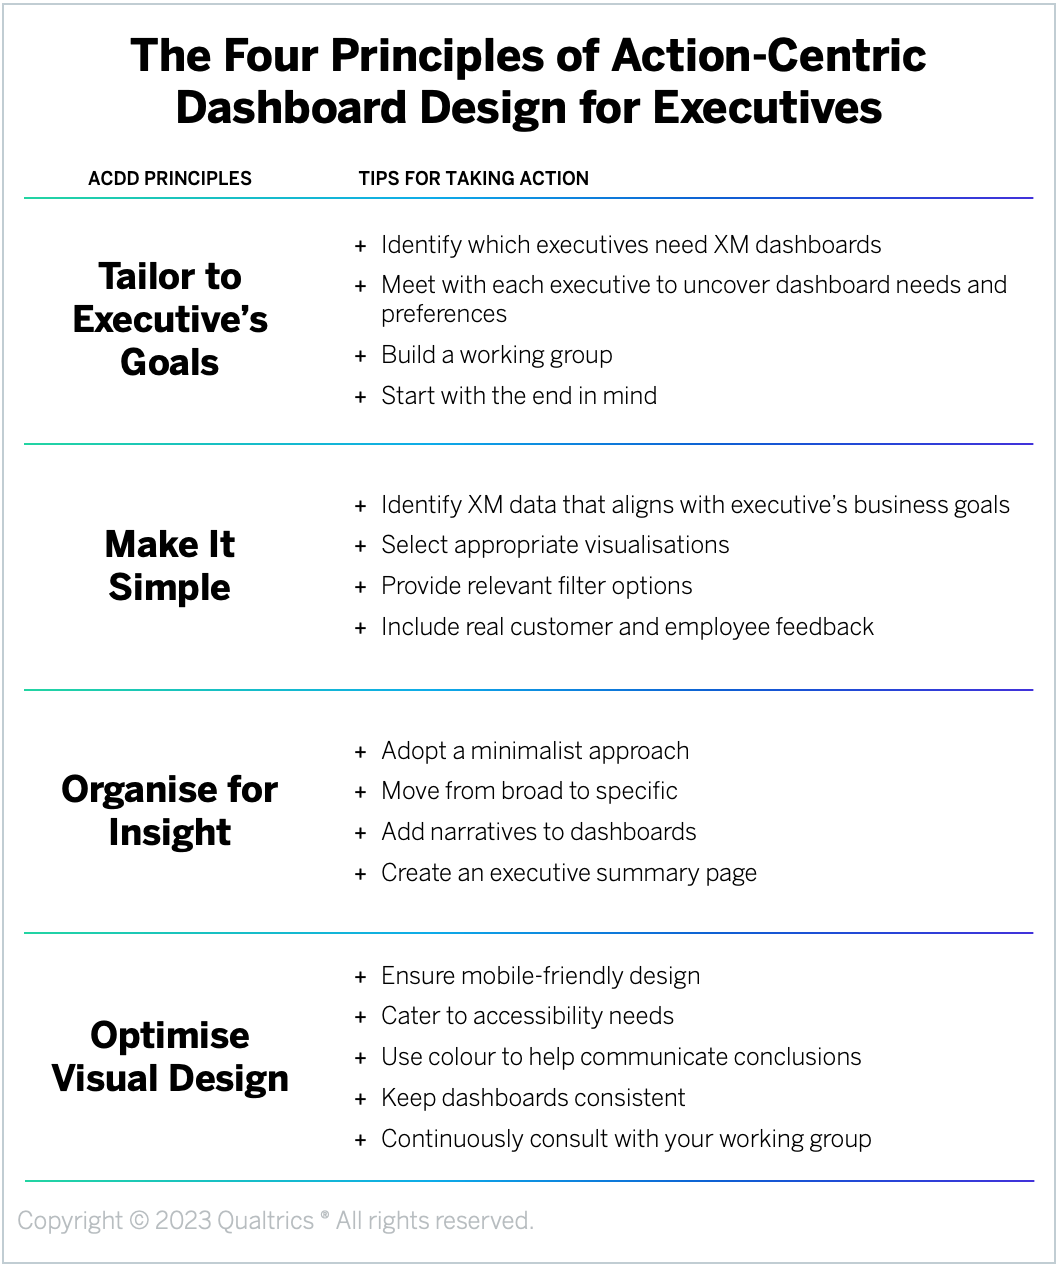 The Four Principles of Action-Centric Dashboard Design for Executives